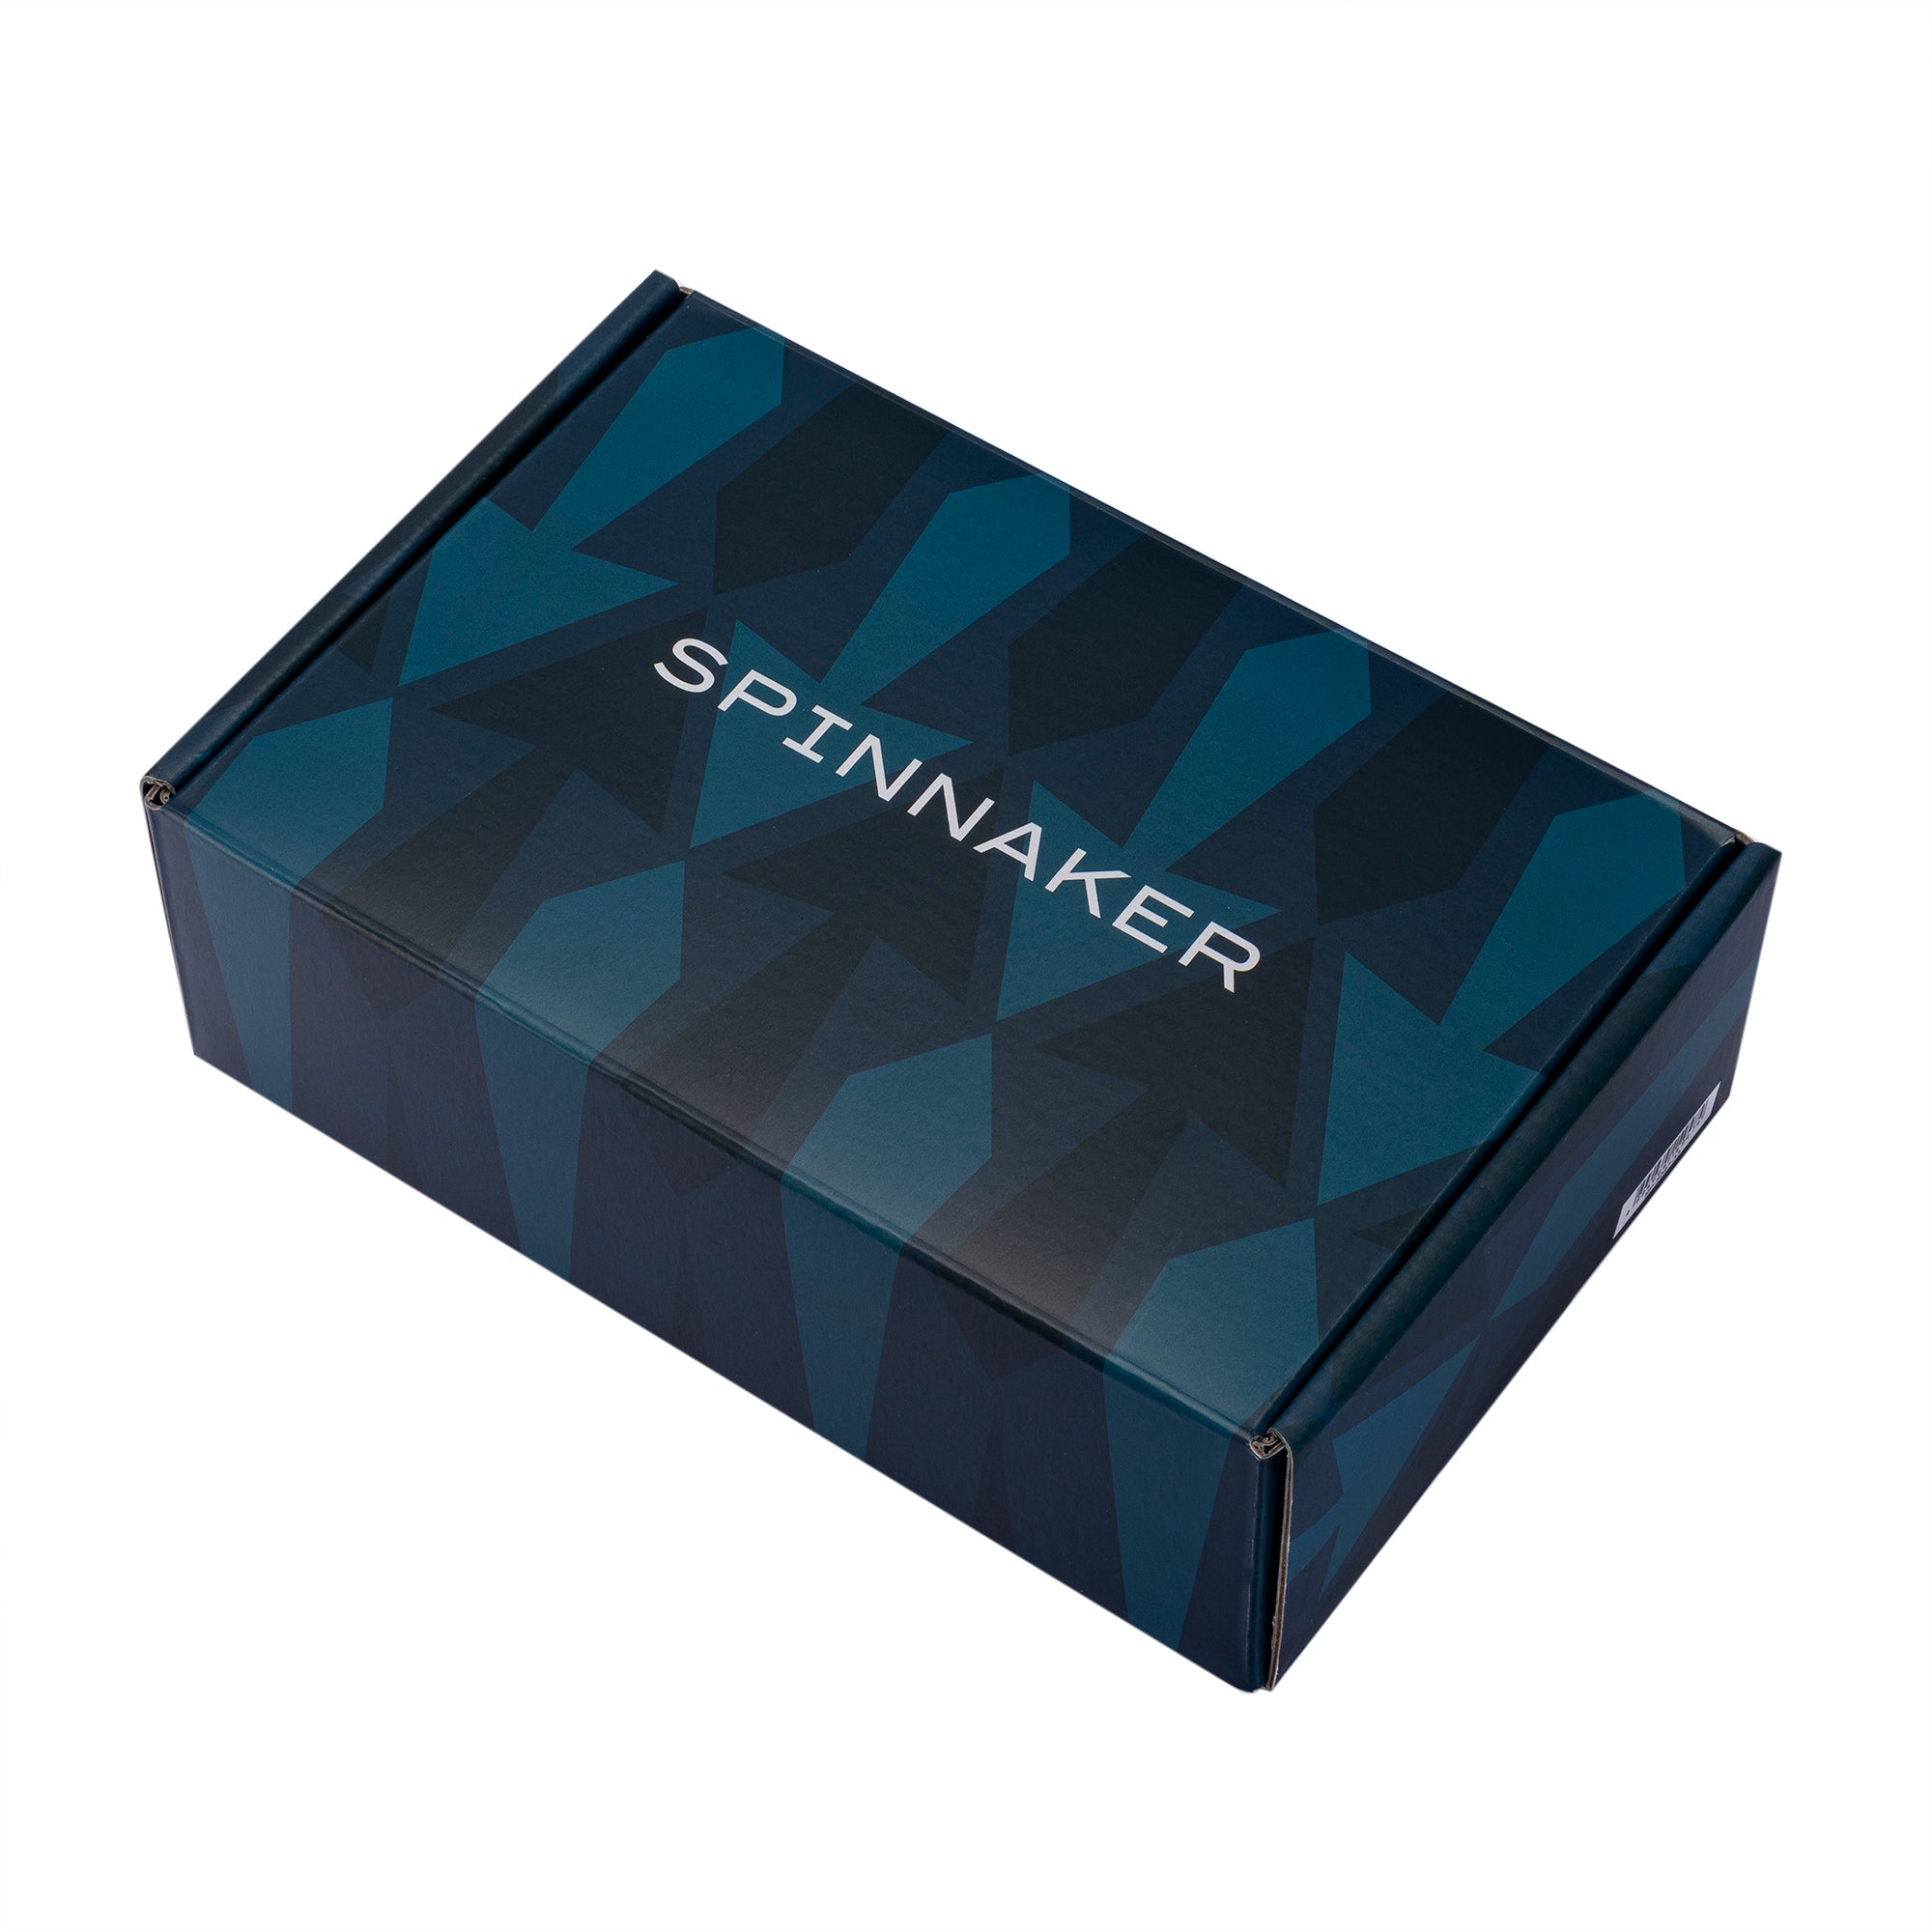 SPINNAKER Spinnaker Spence Men's Japanese Automatic Indigo Blue Watch SP-5097-22